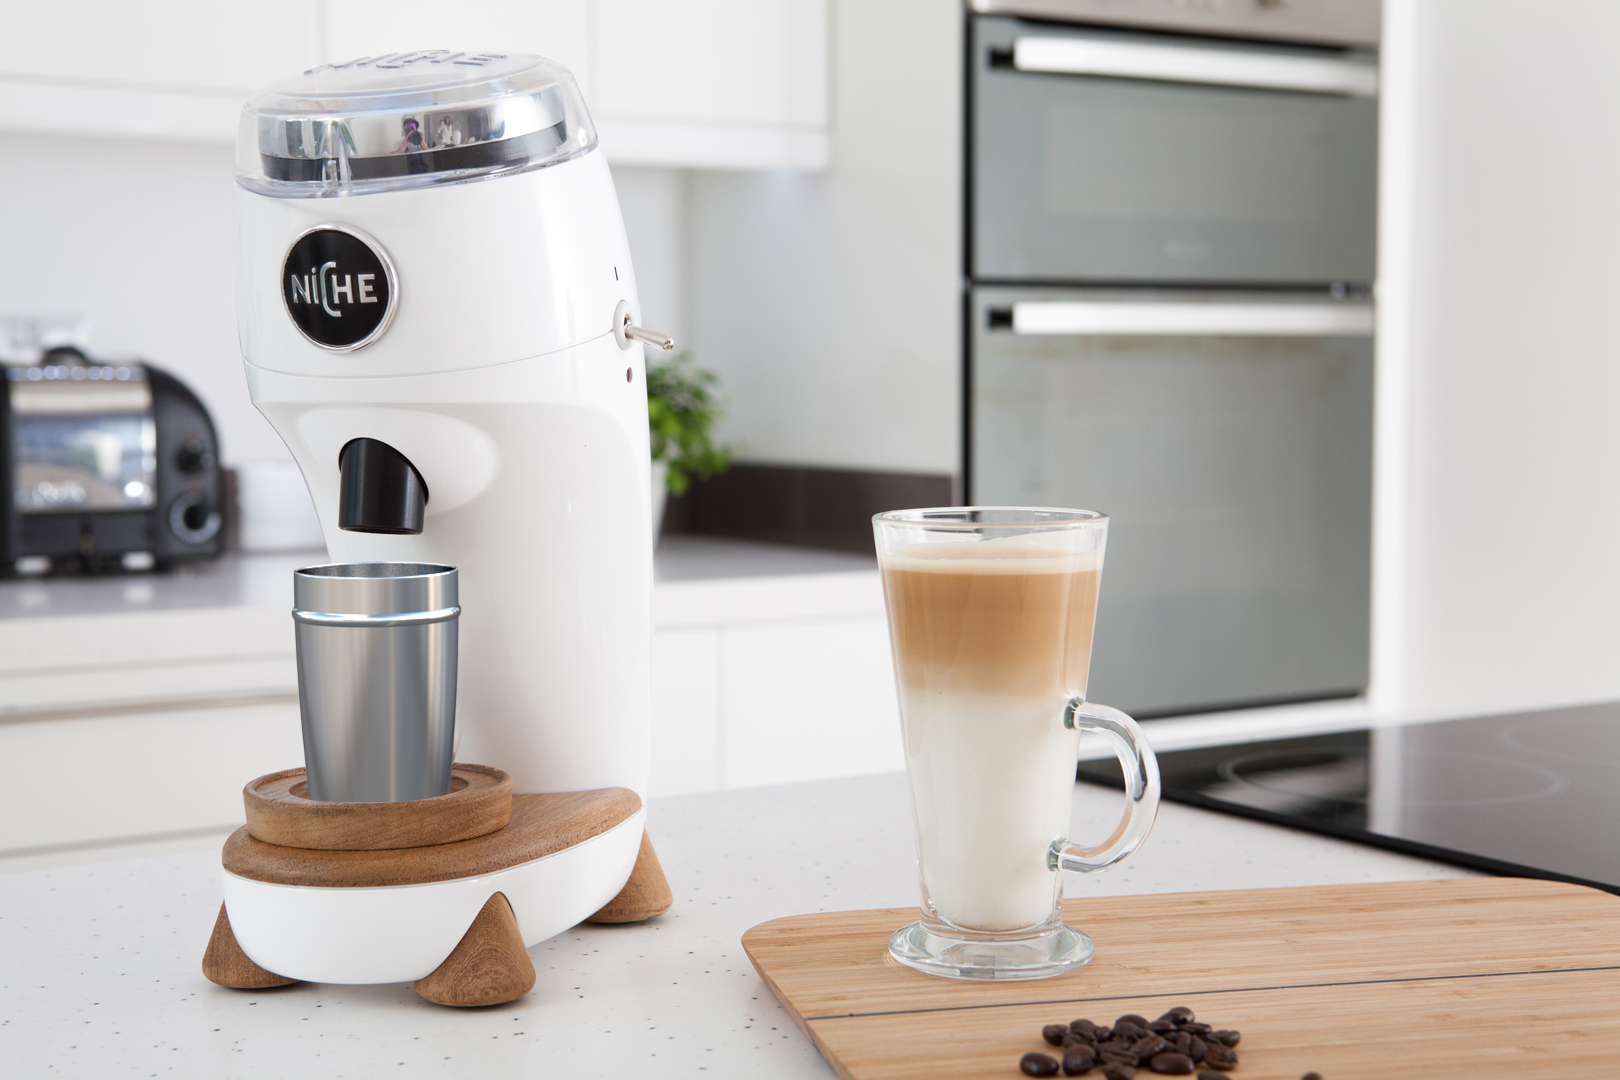 The Niche Zero Coffee Grinder looks stylish in any kitchen.